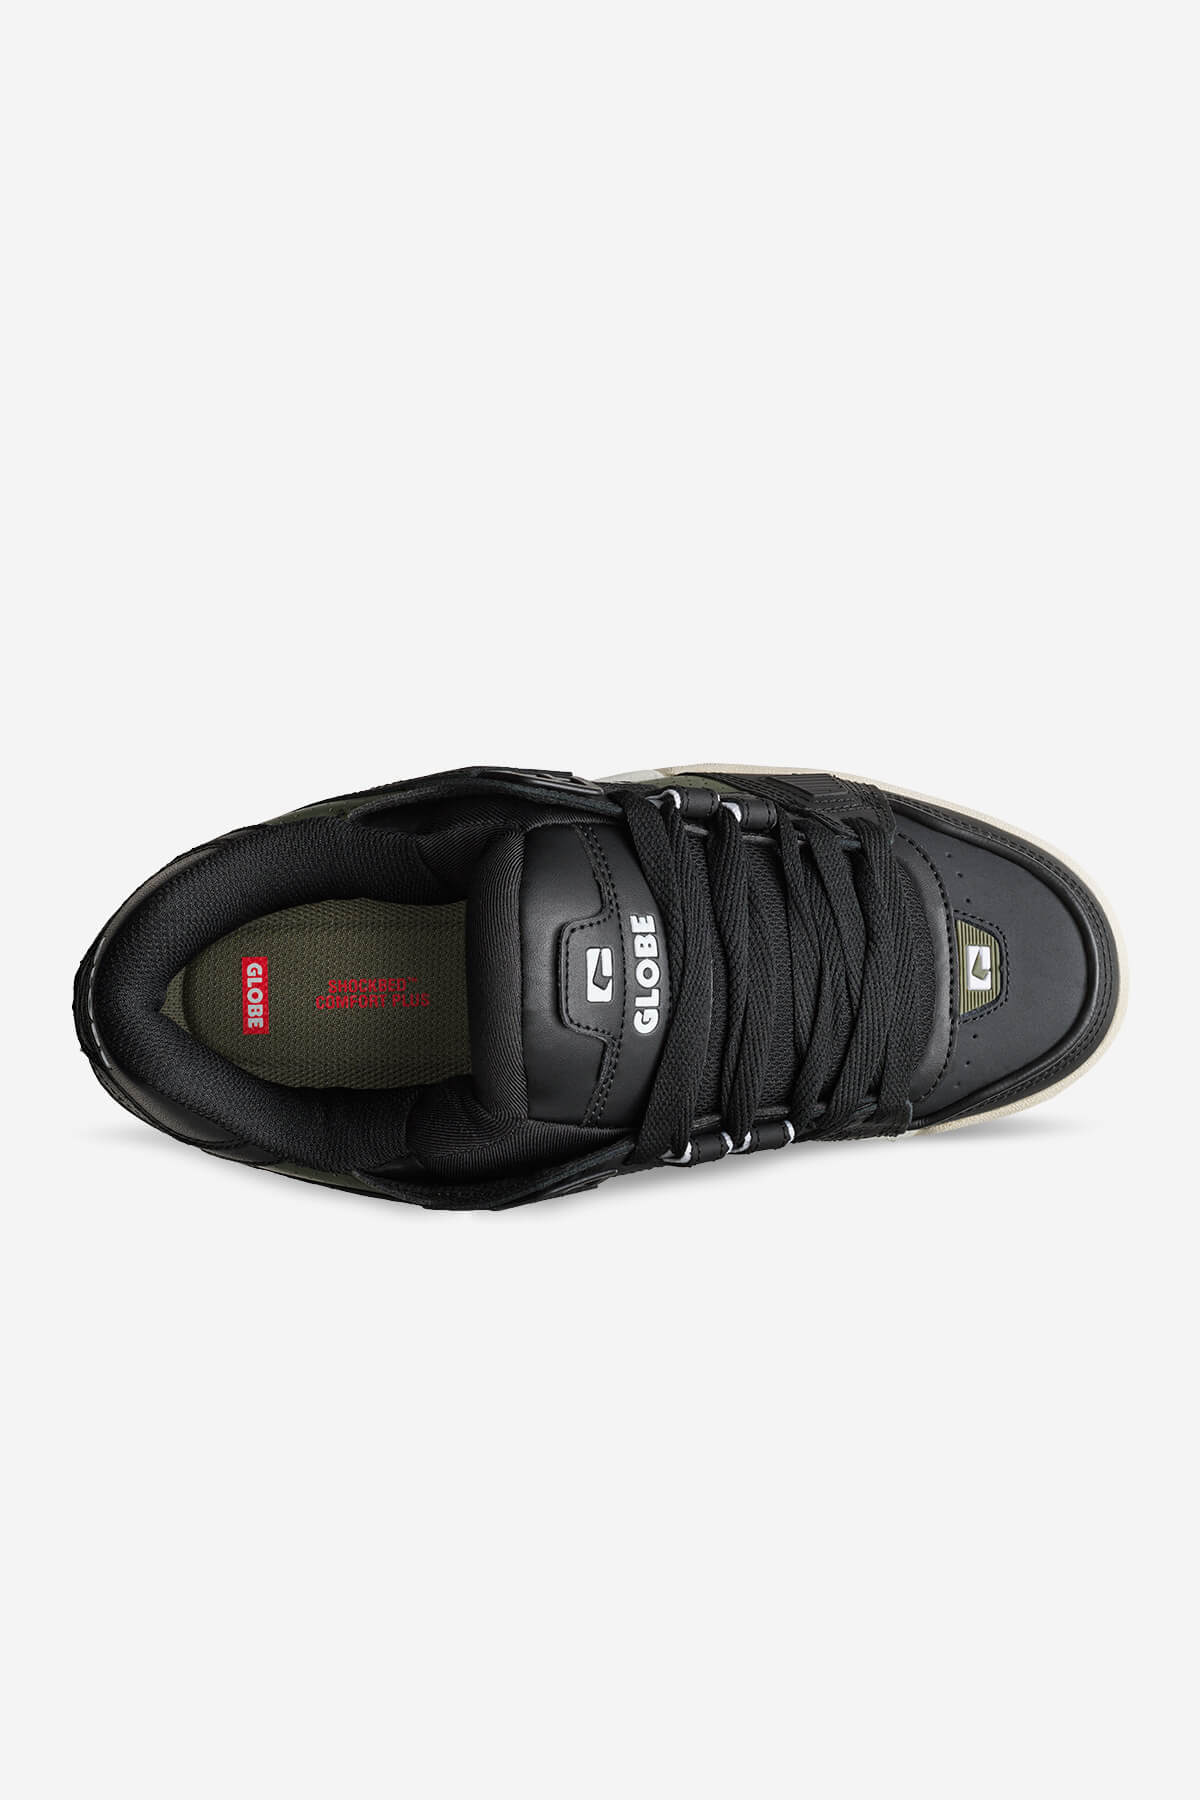 Globe - Sabre - Negro/Combate - skateboard Zapatos